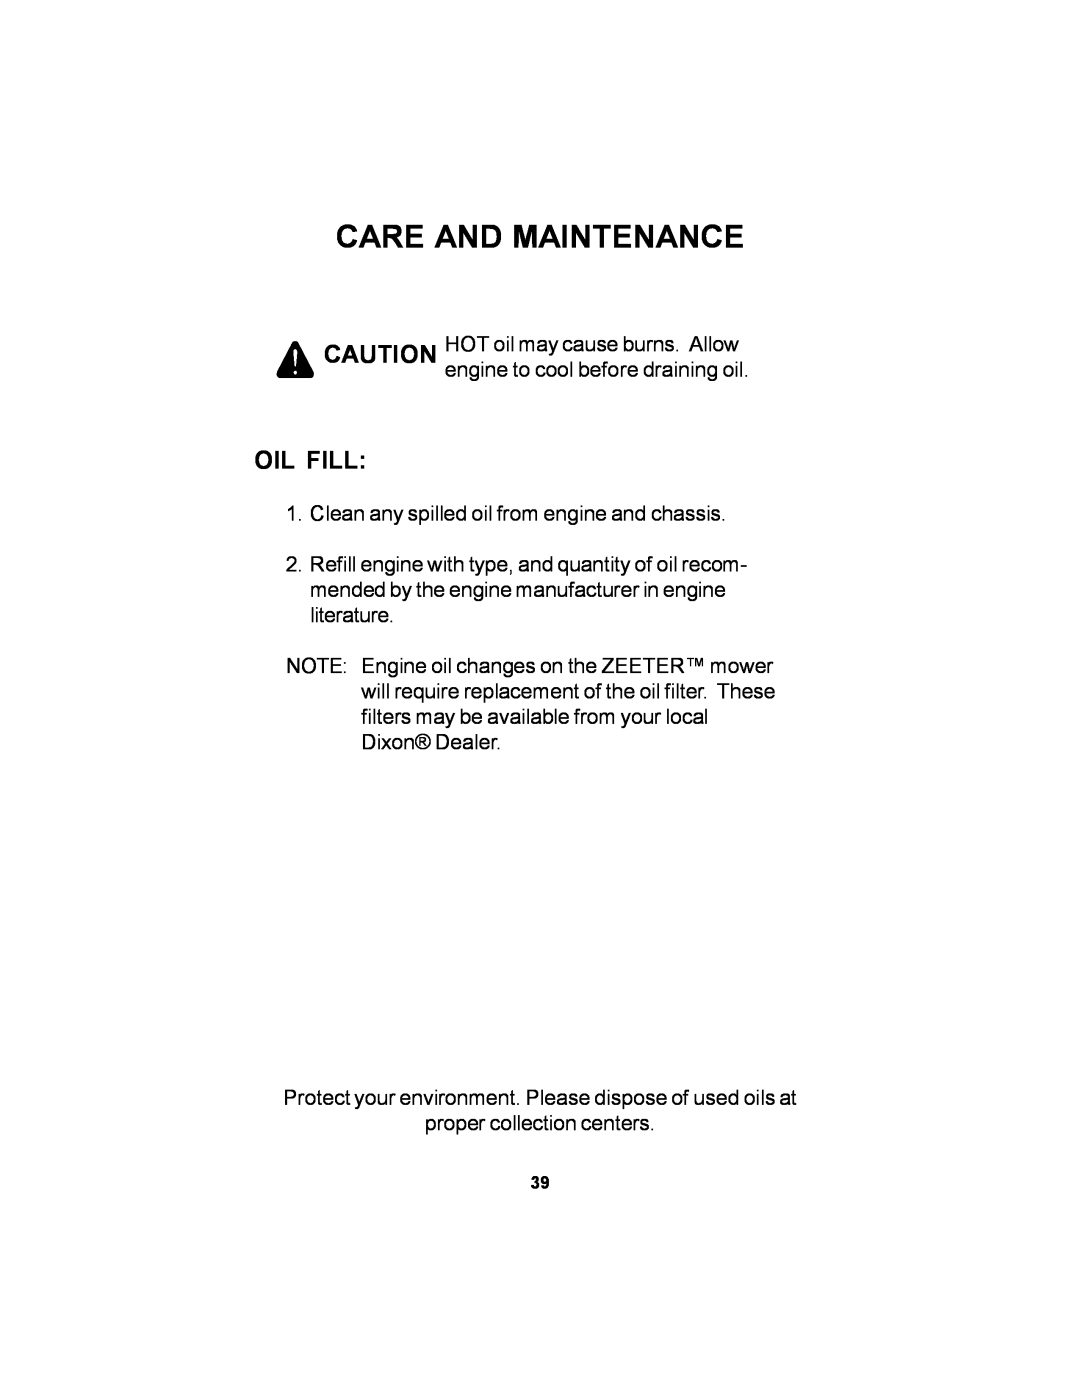 Dixon 14295-1005 manual Oil Fill, Care And Maintenance 